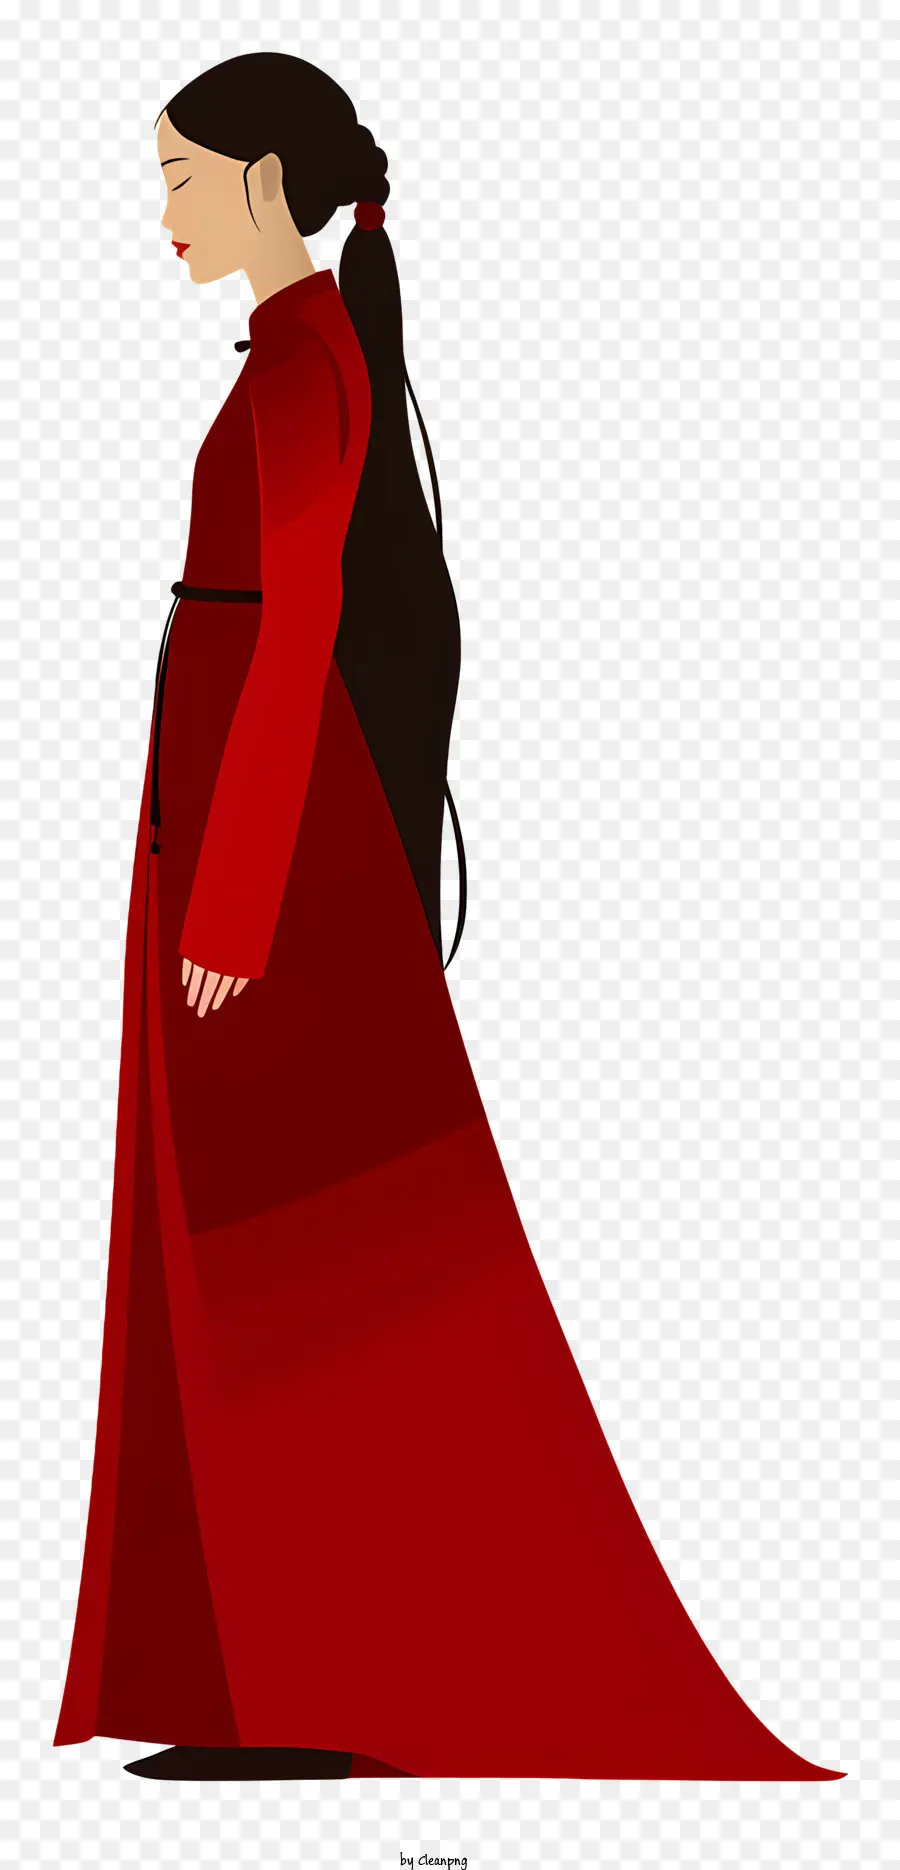 fashion girl red dress elegance royalty gracefulness